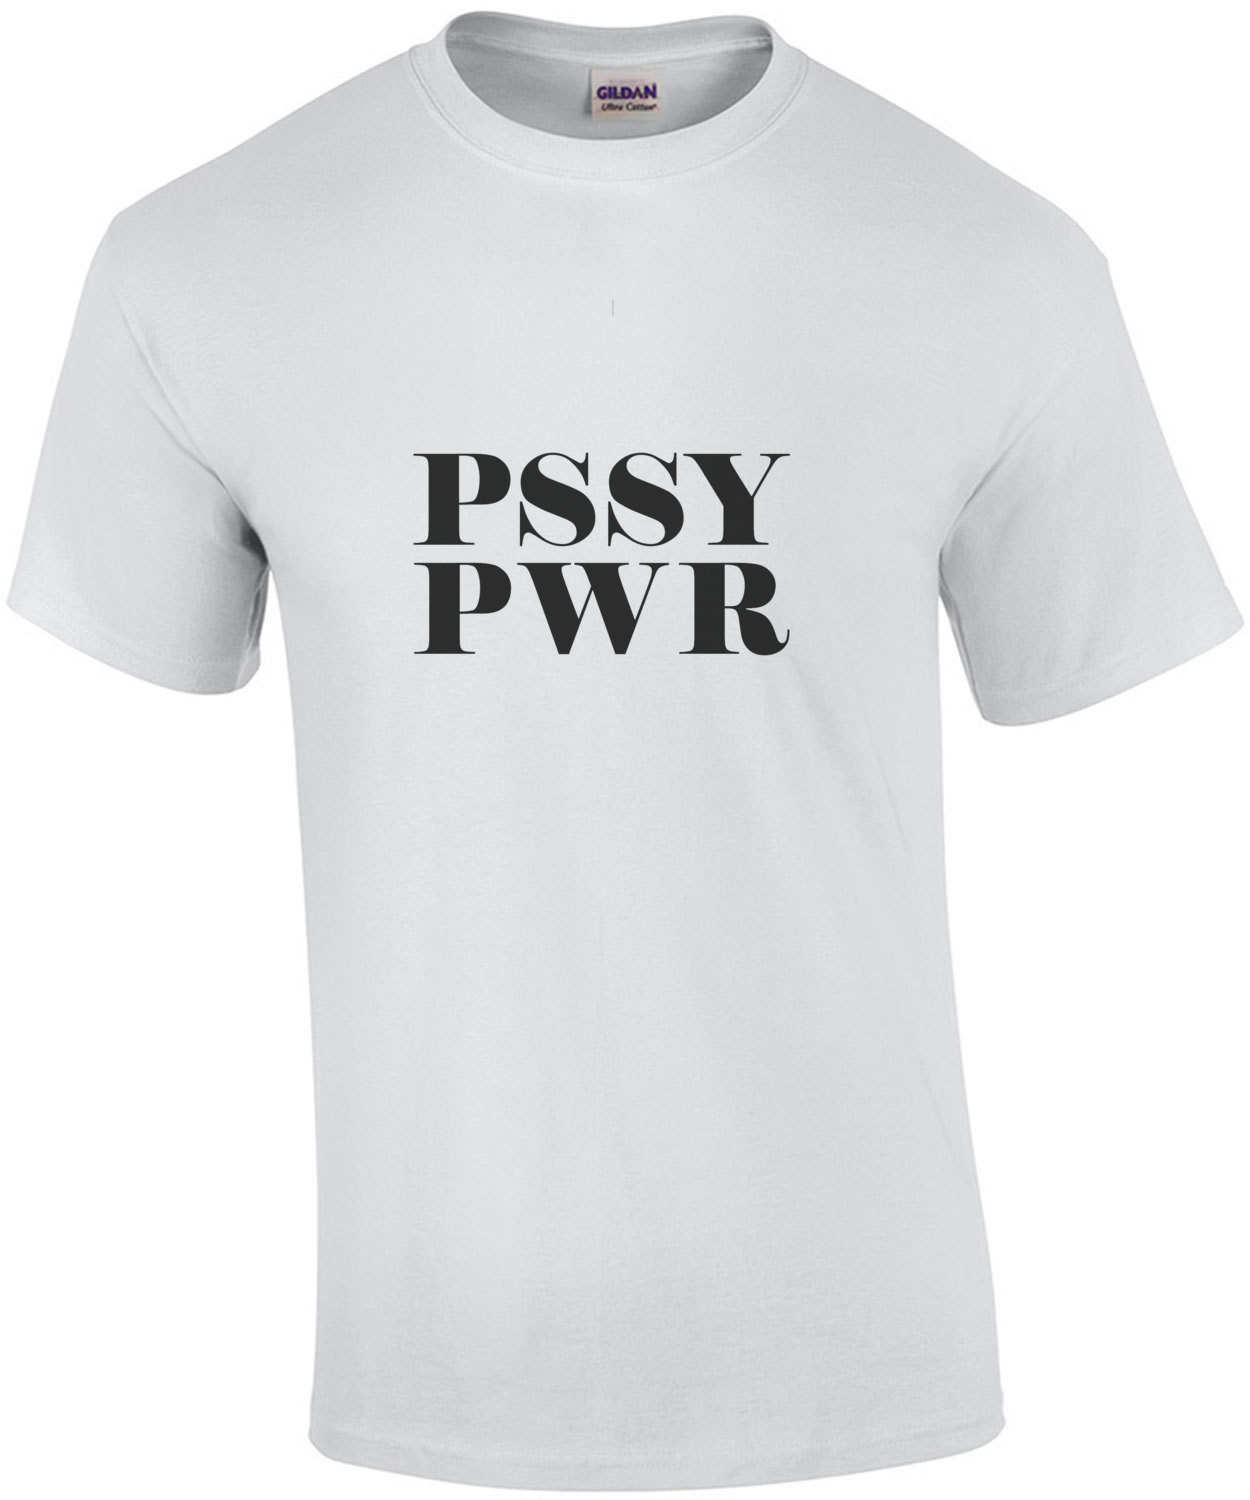 PSSY PWR - Feminist T-Shirt